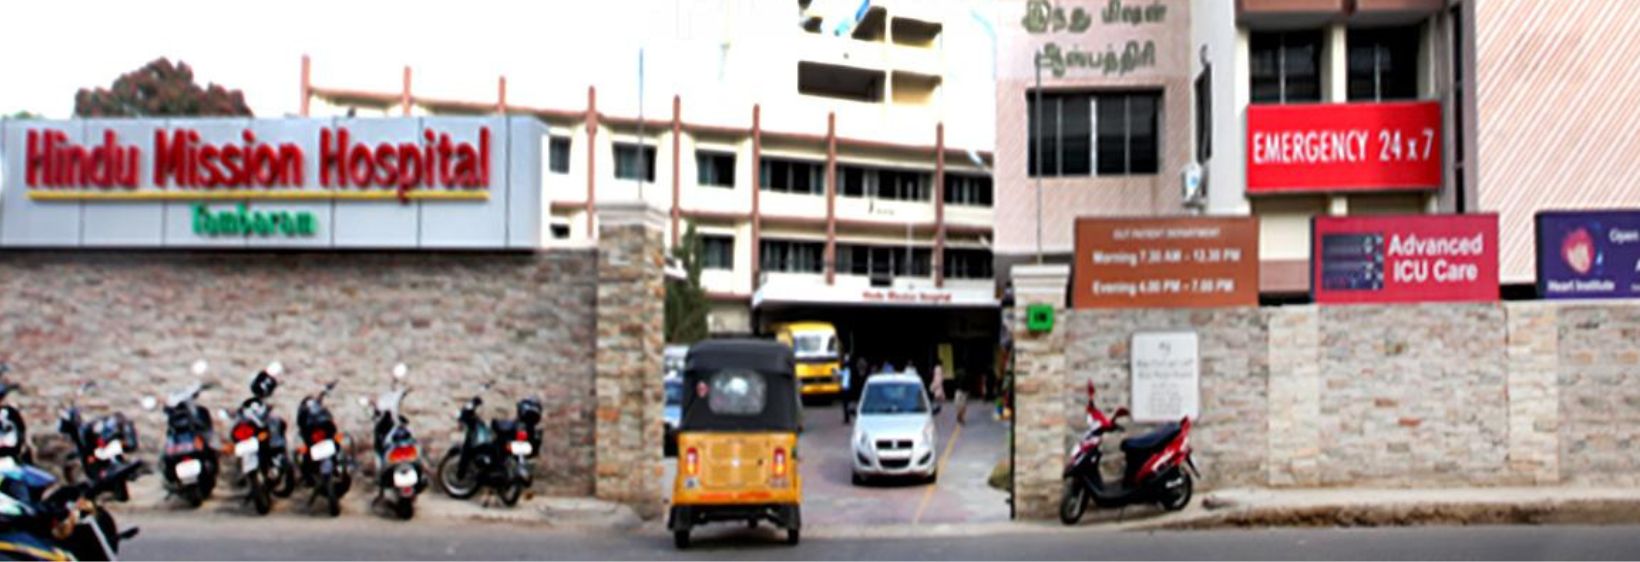 Hindu Mission College of Nursing - Tambaram, Chennai